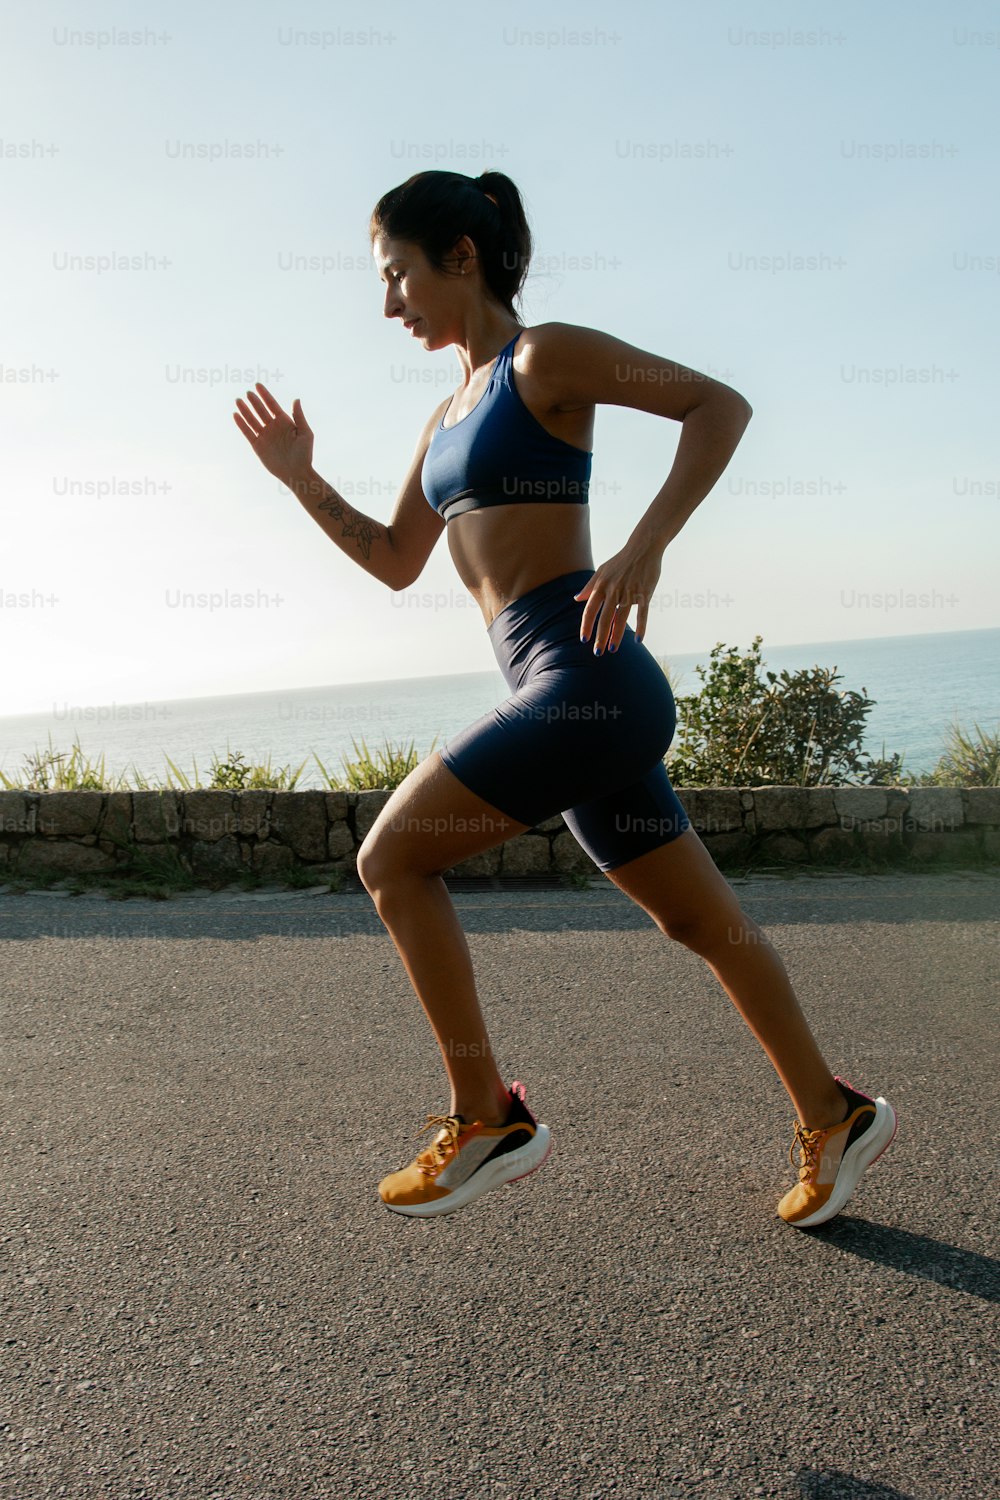 Una mujer corriendo por una carretera cerca del océano